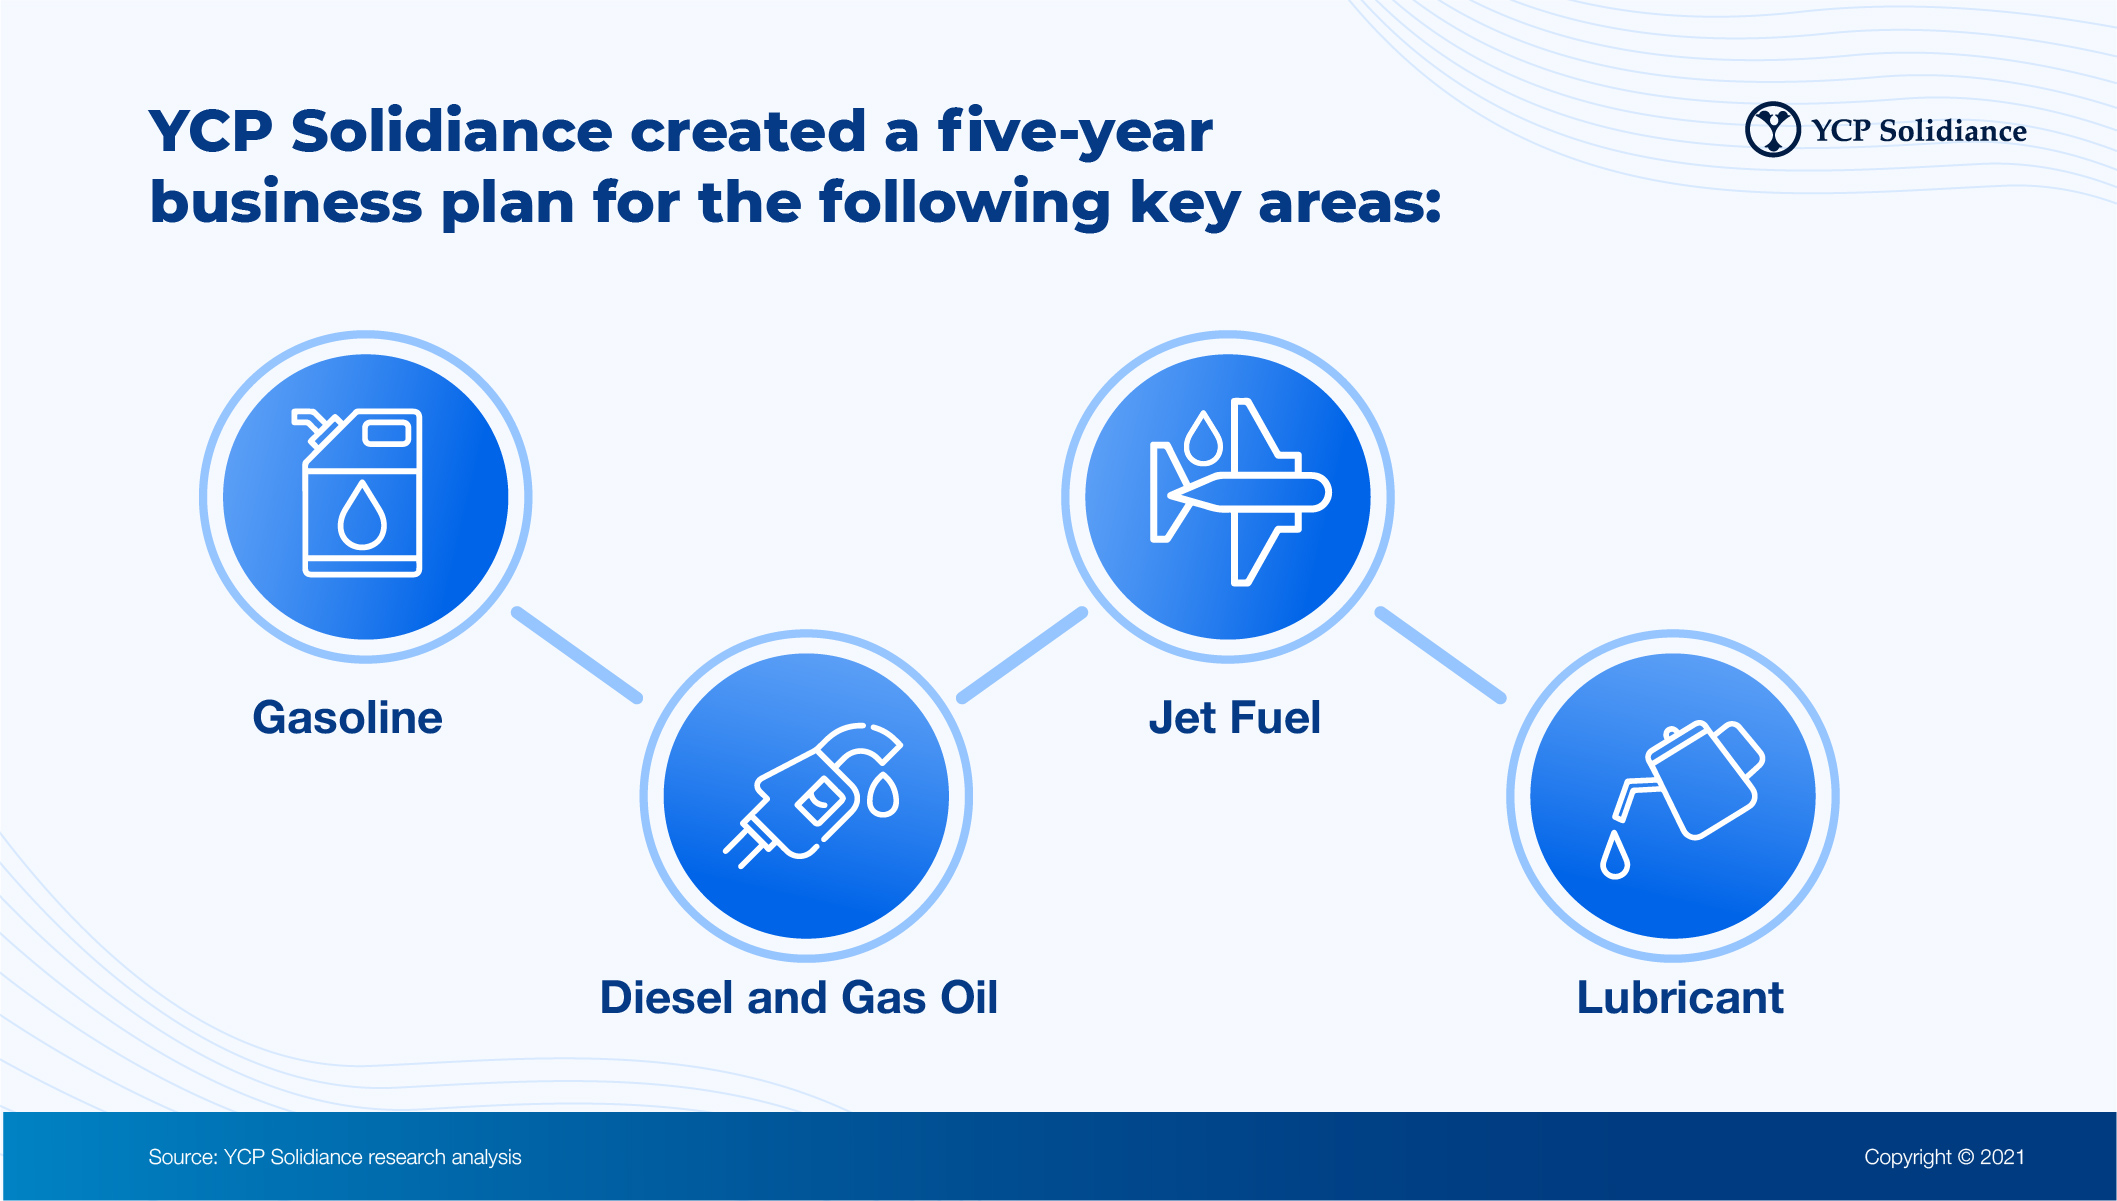 business plan for petroleum